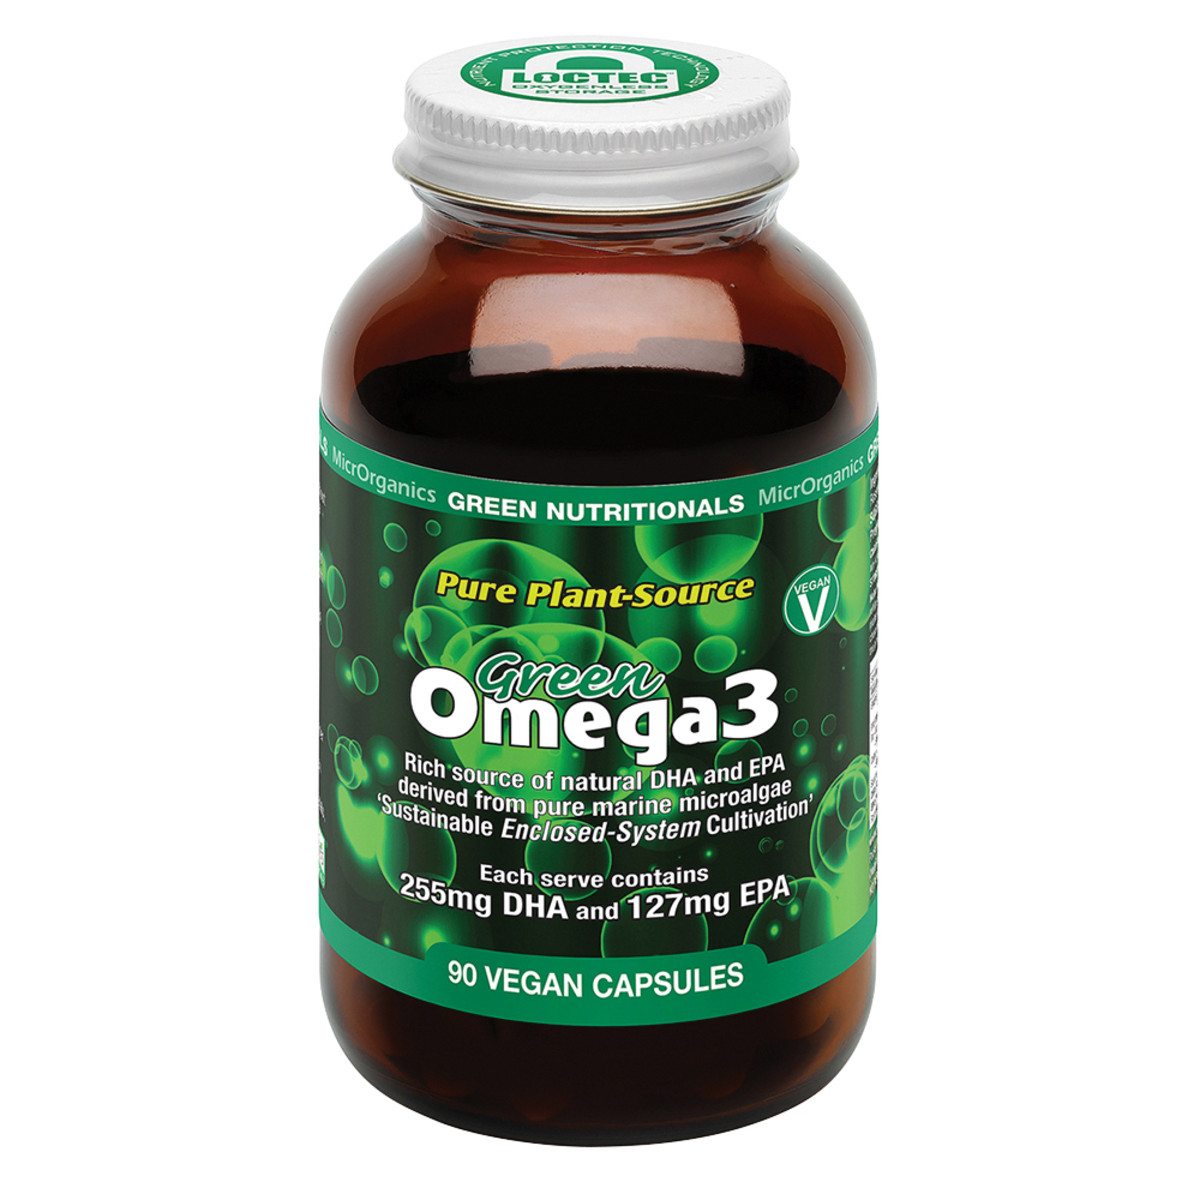 MICRORGANICS - Green Omega 3 (Vegan)